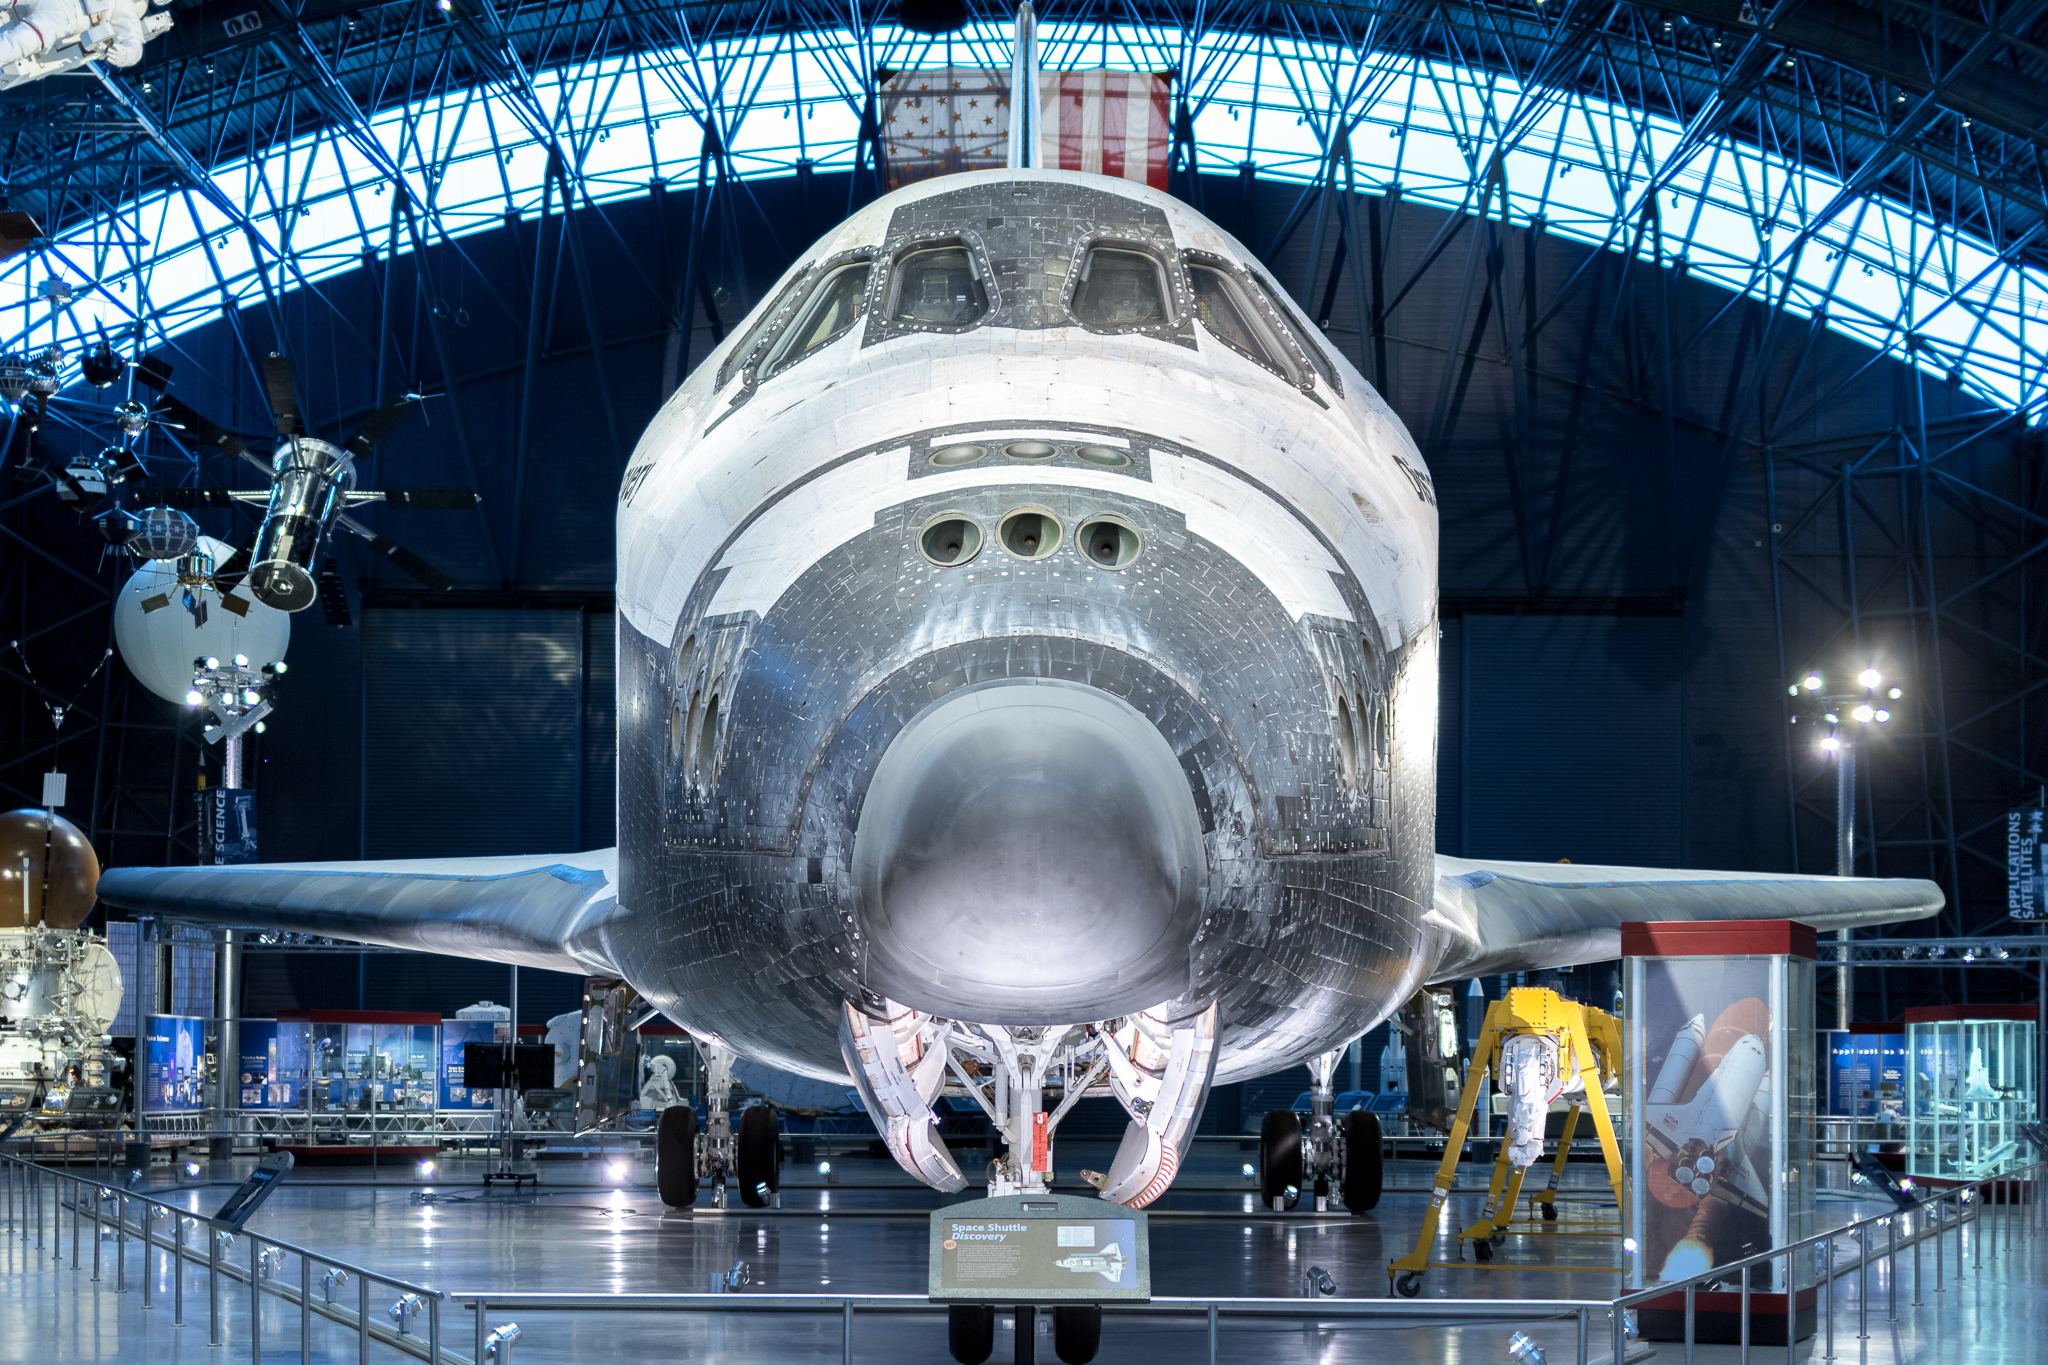 Space Shuttle Discovery "OV-103” at Steven F. Udvar-Hazy Center